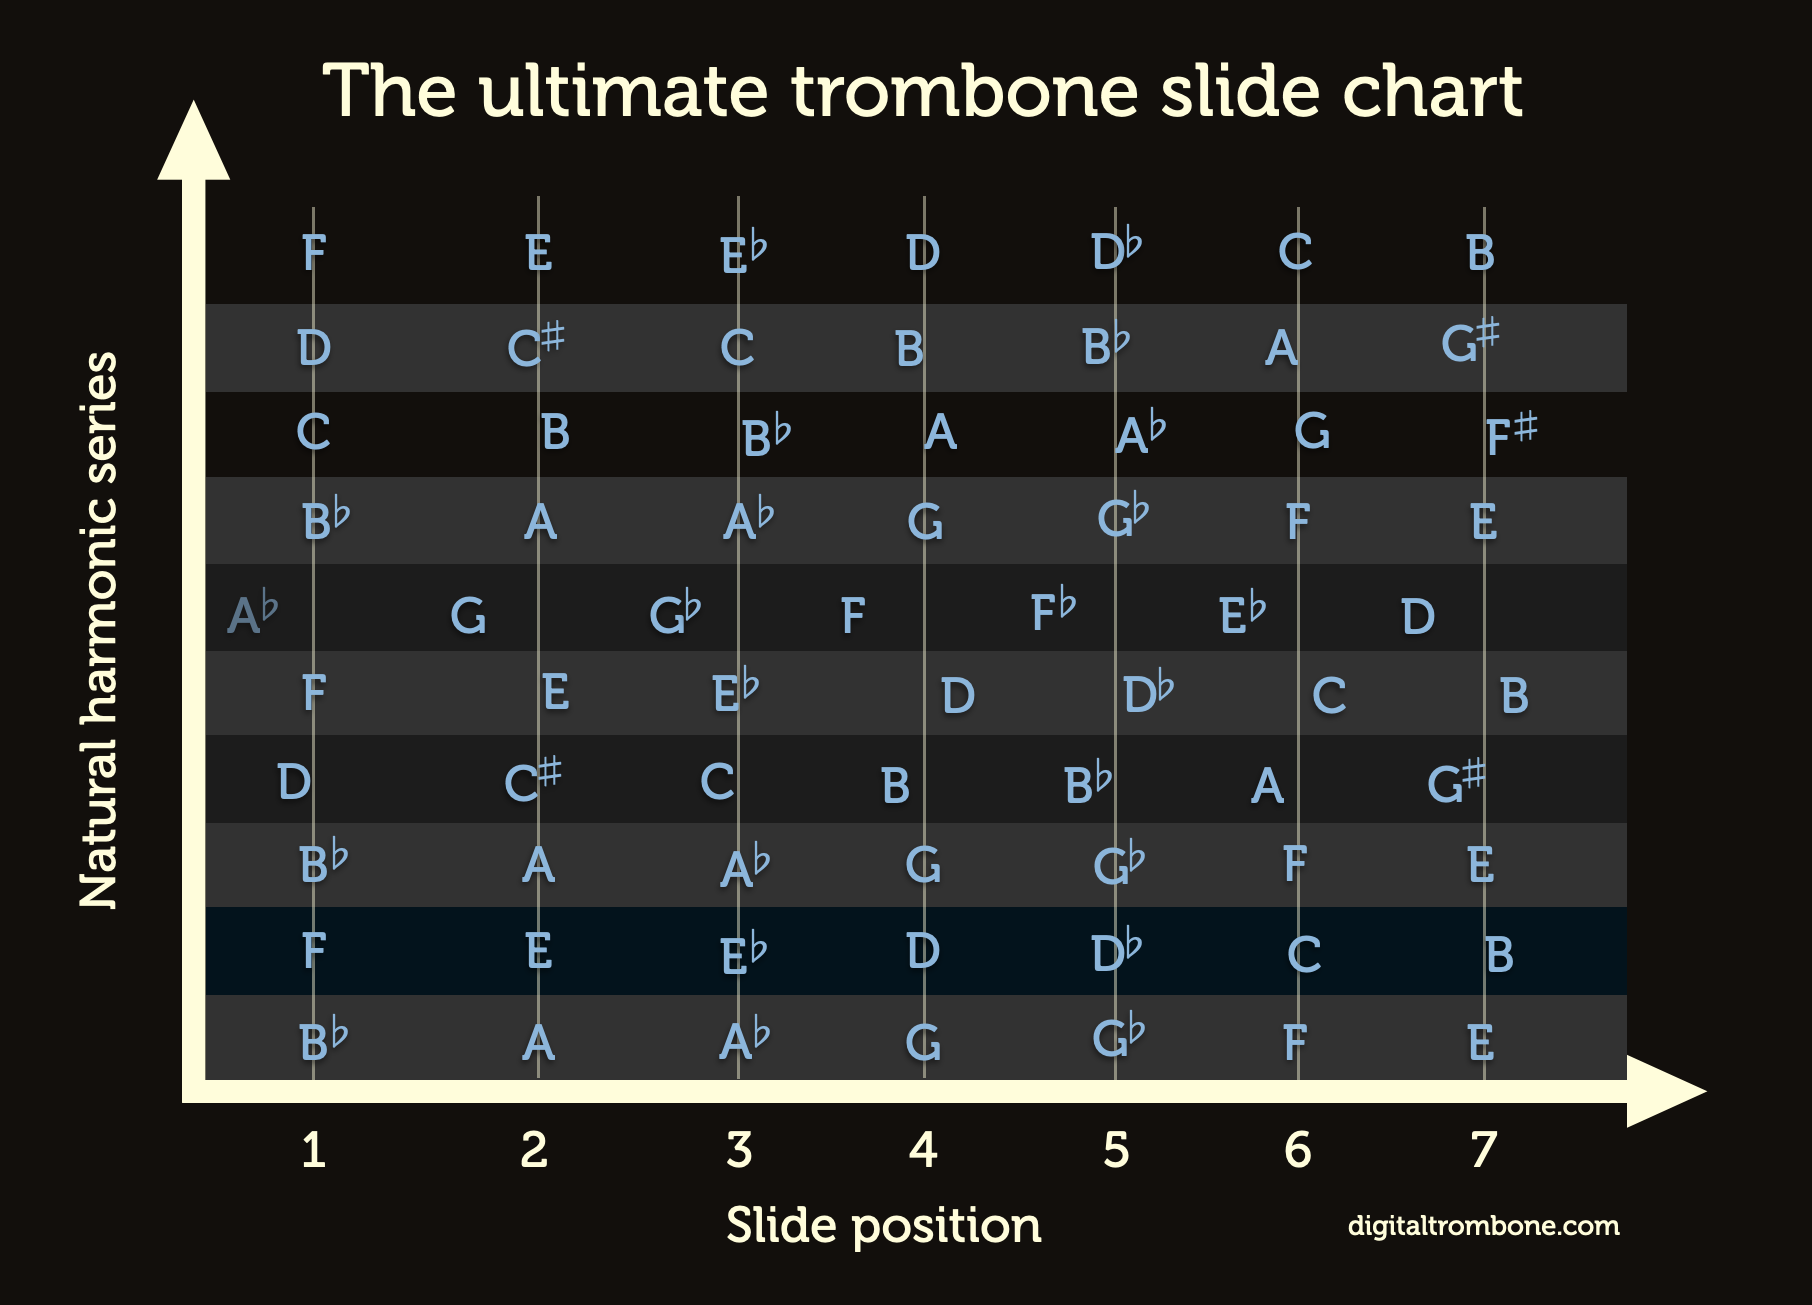 The ultimate trombone slide chart